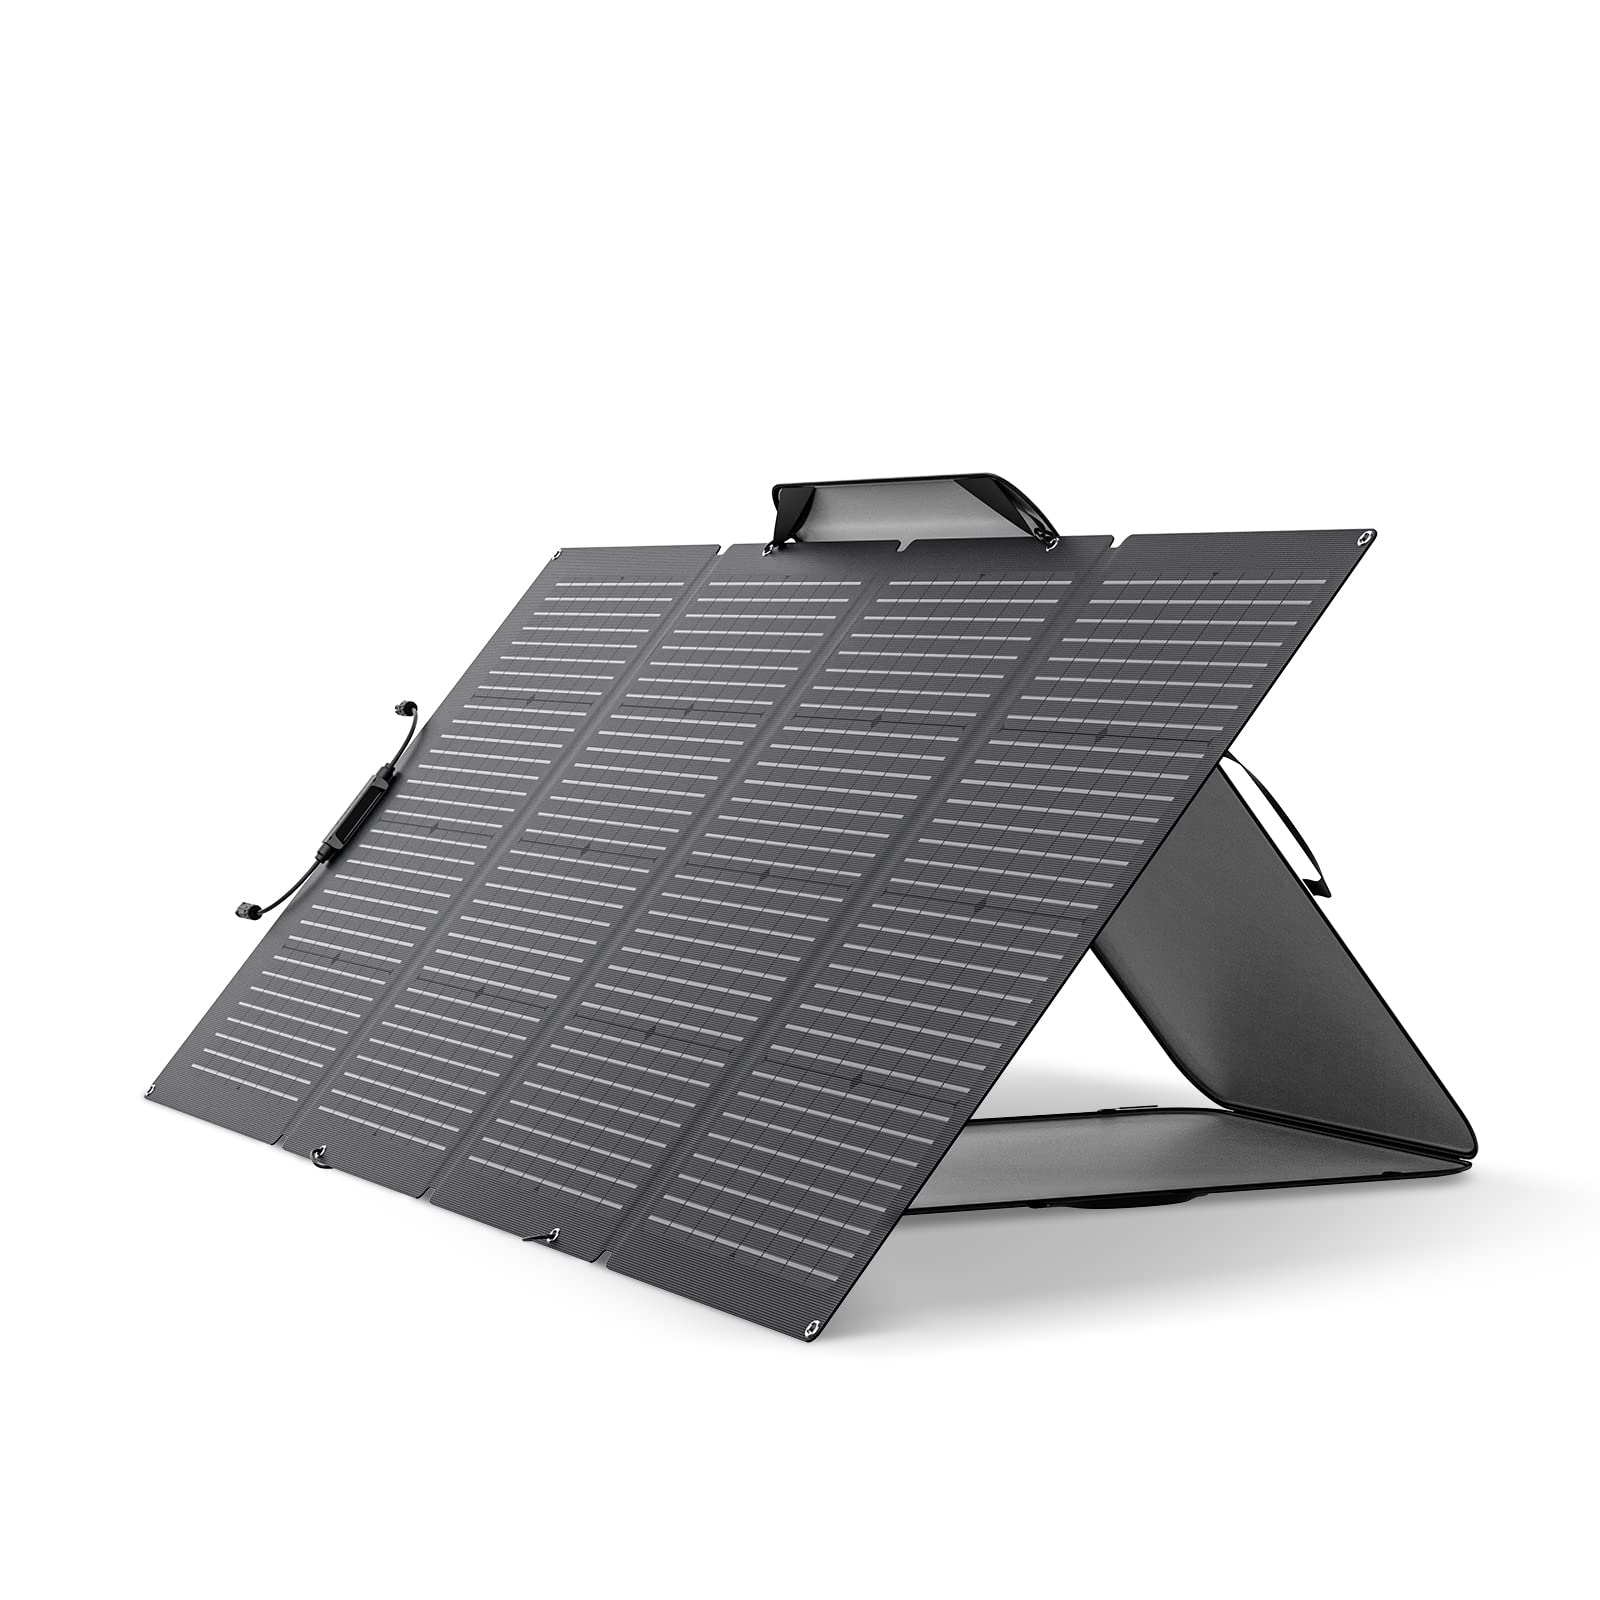 EF ECOFLOW 22EF ECOFLOW 220Watt Bifacial Foldable Solar Pa0Watt Bifacial Foldable Solar Panel, Complete with Adjustable Kickstand, Waterproof IP68 $379